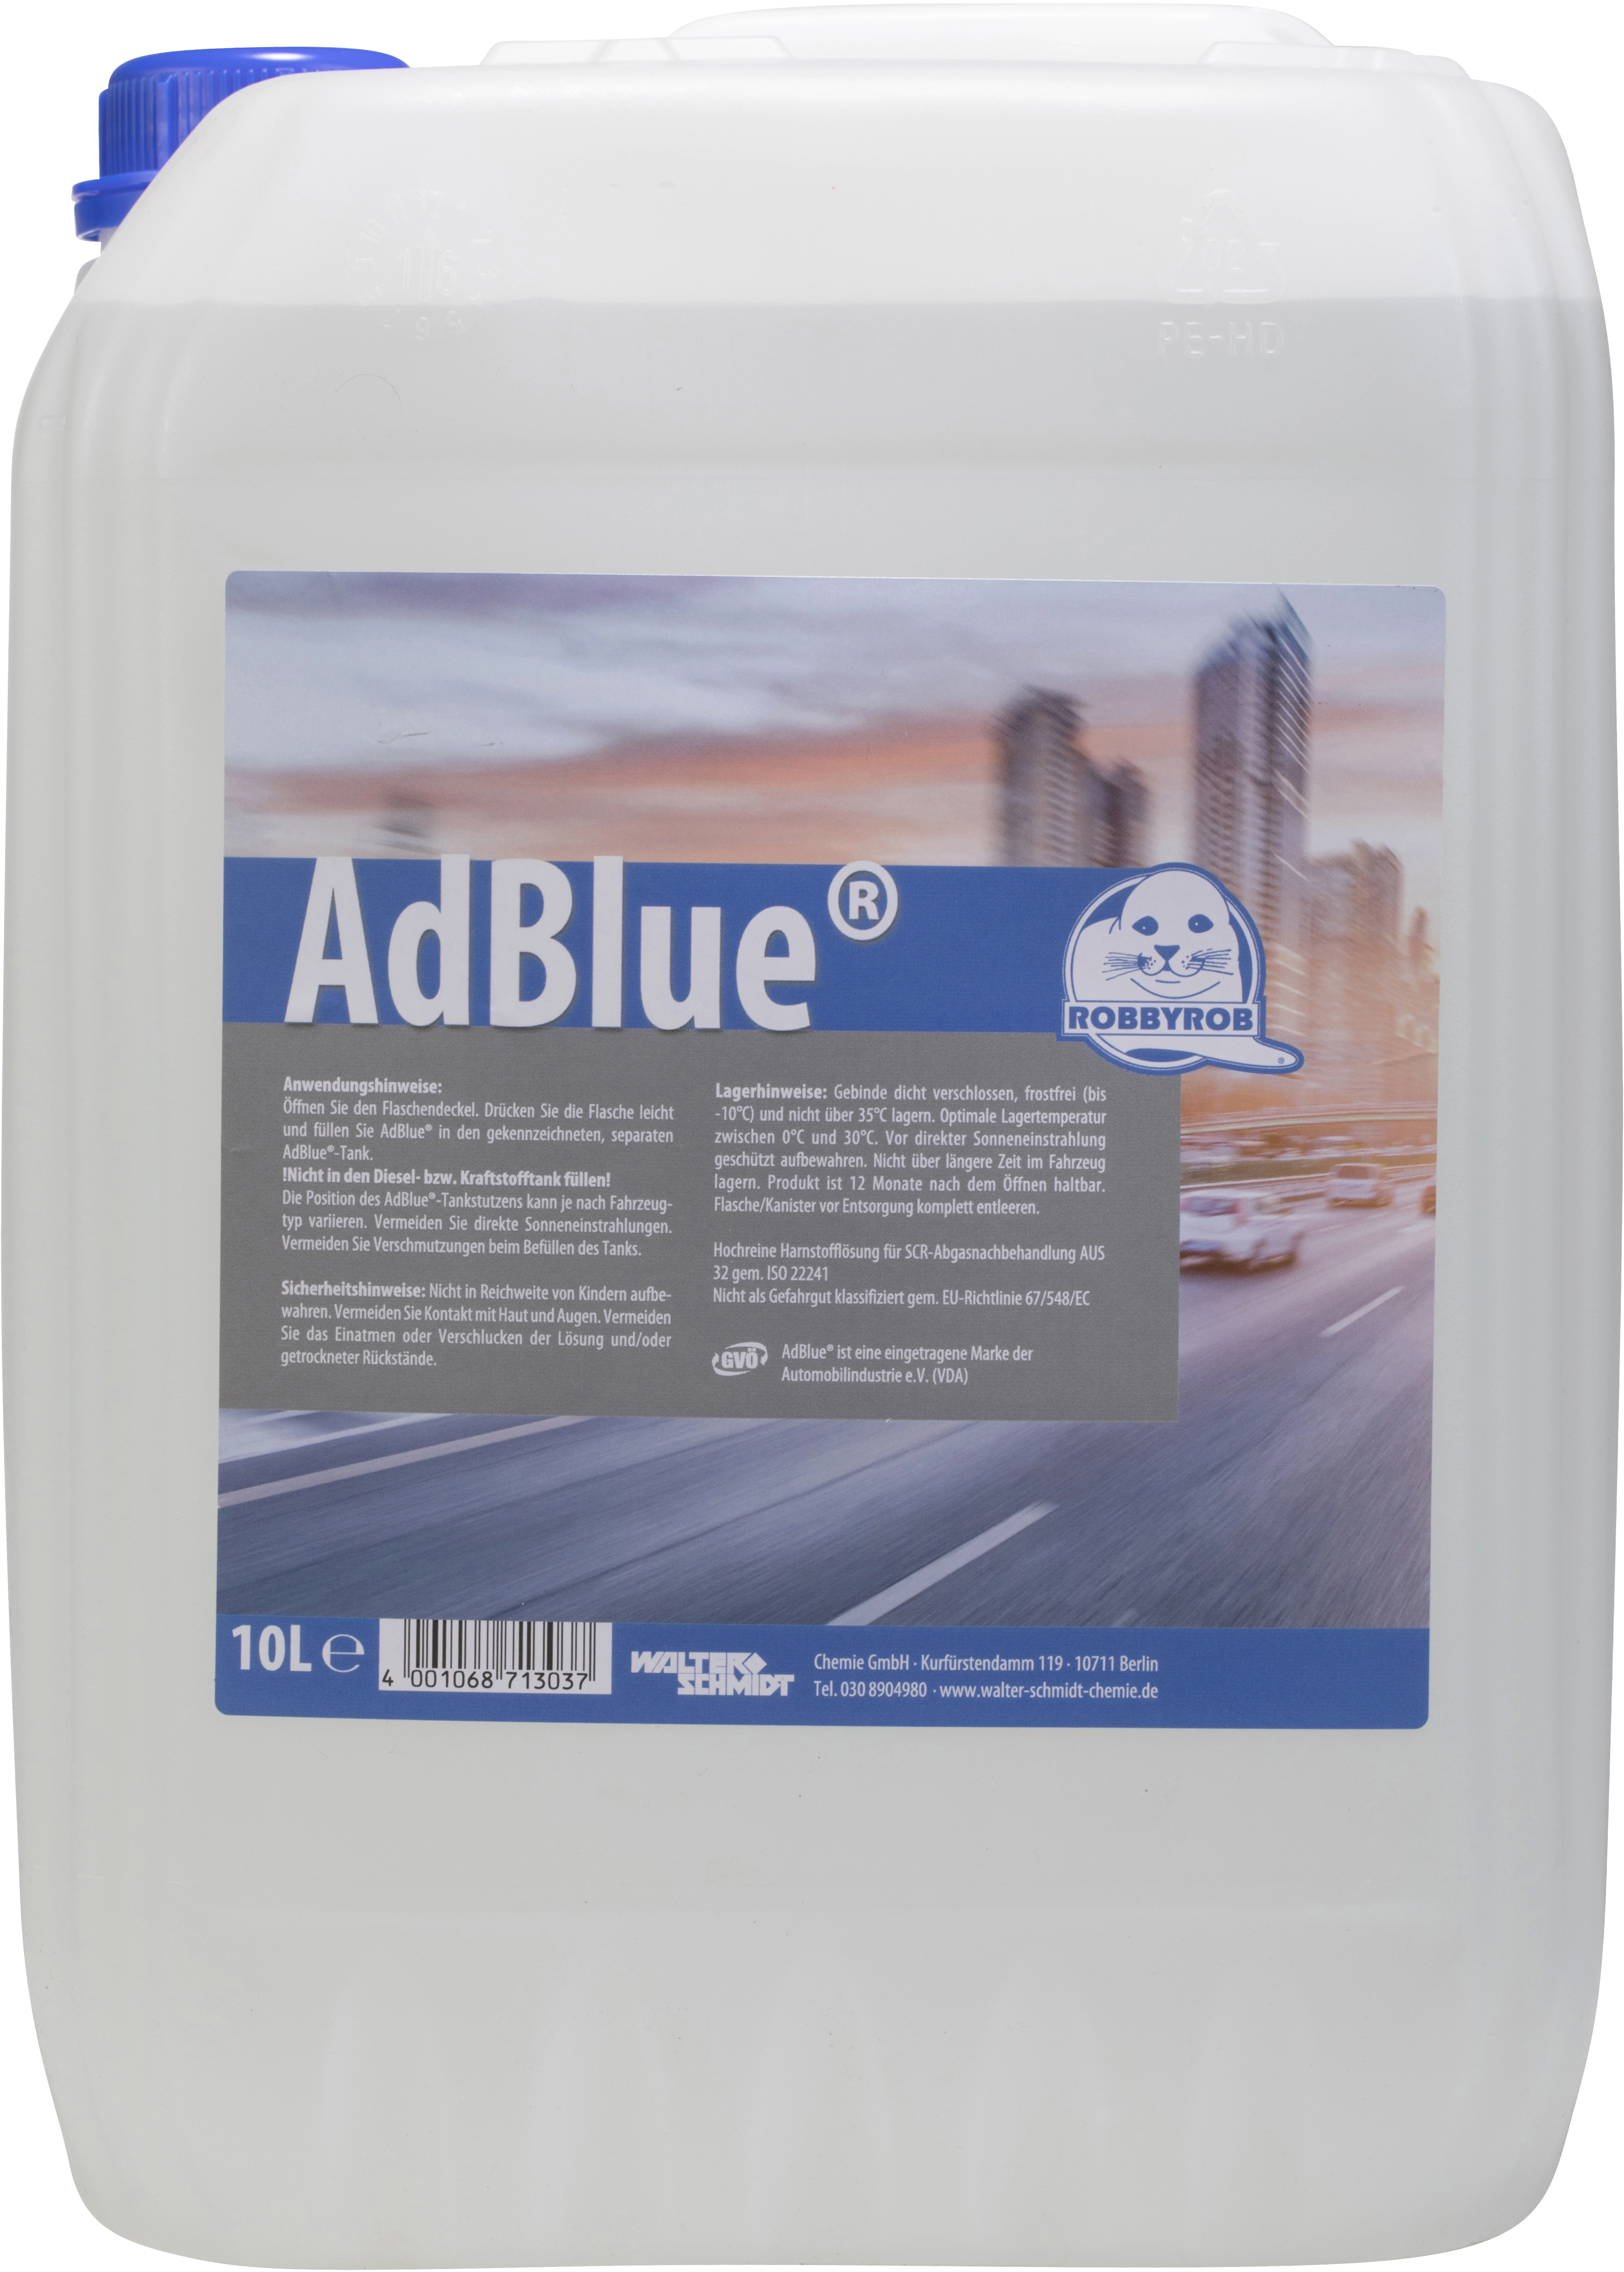 Adblue kaufen bei OBI